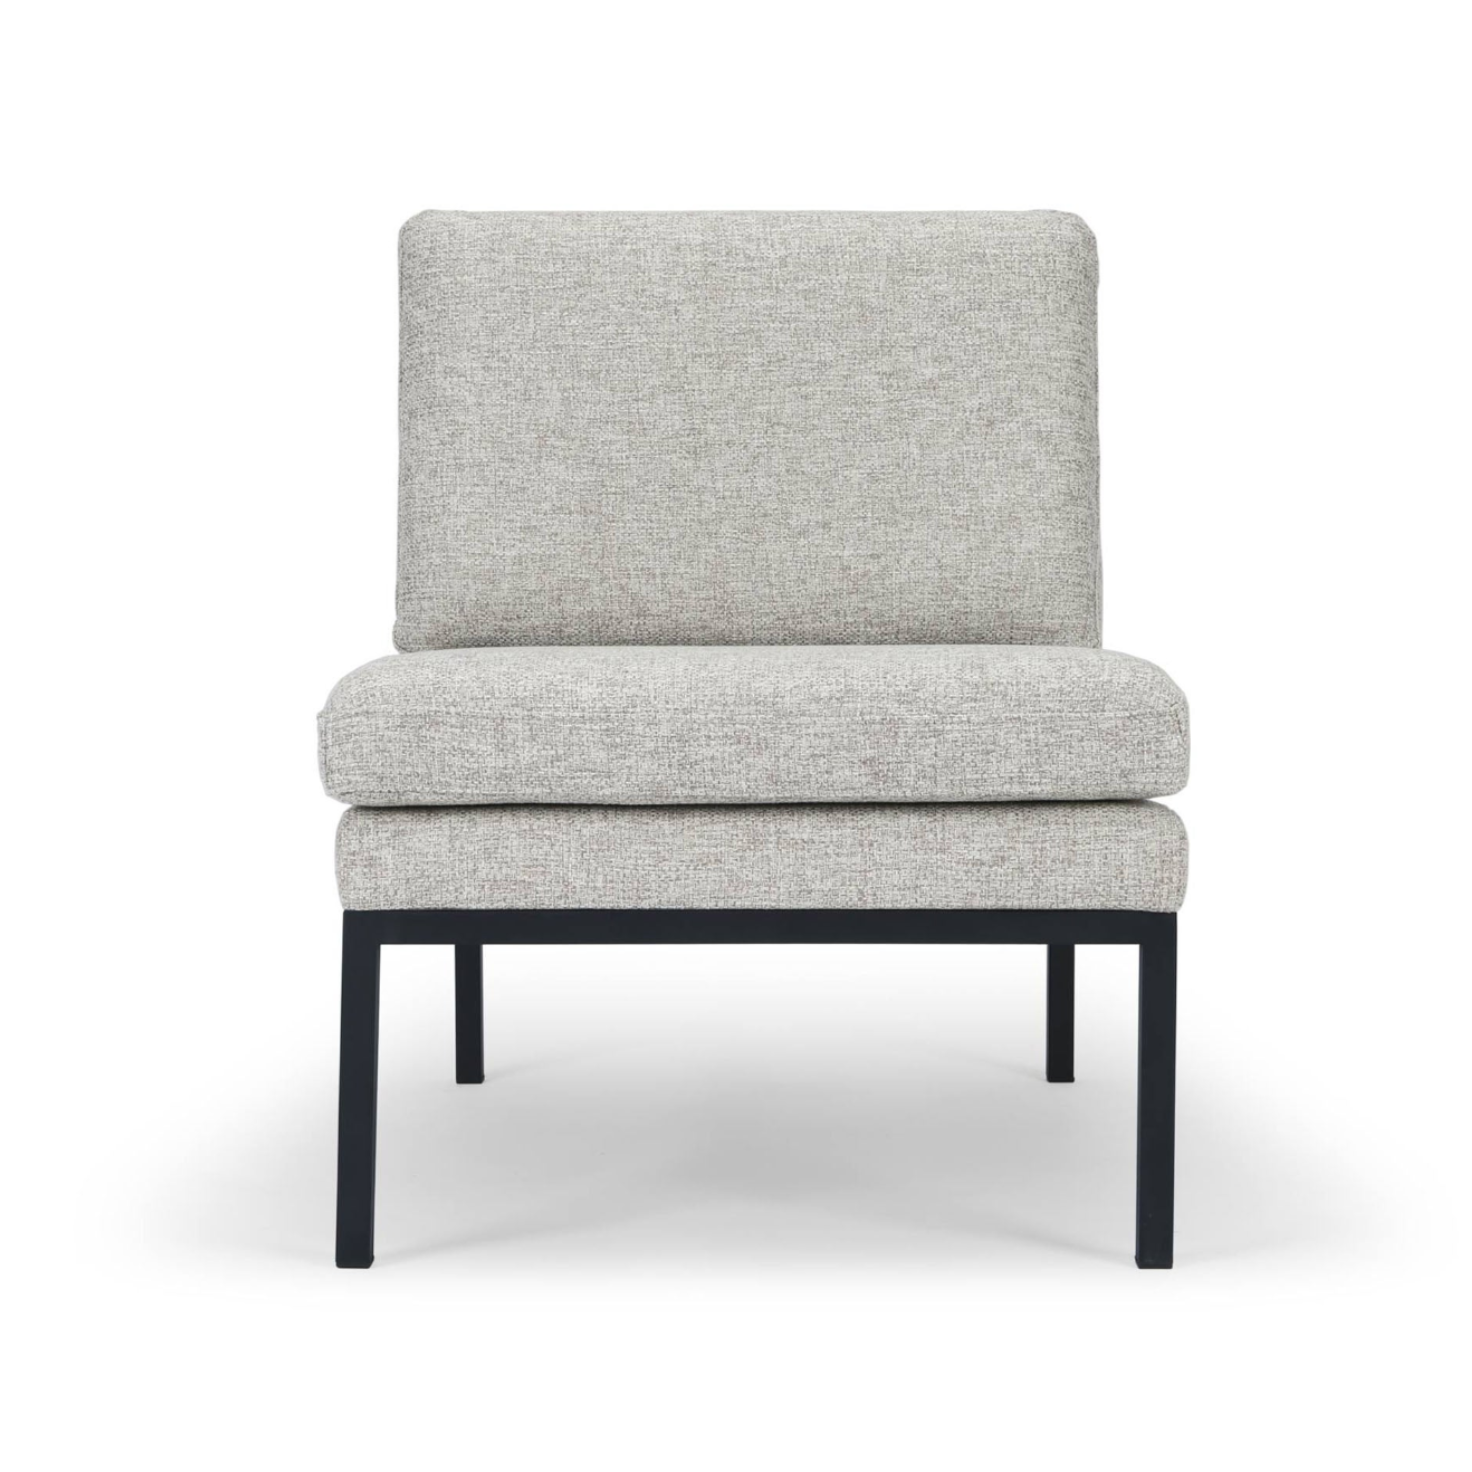 Modular single armless sofa chair (1)